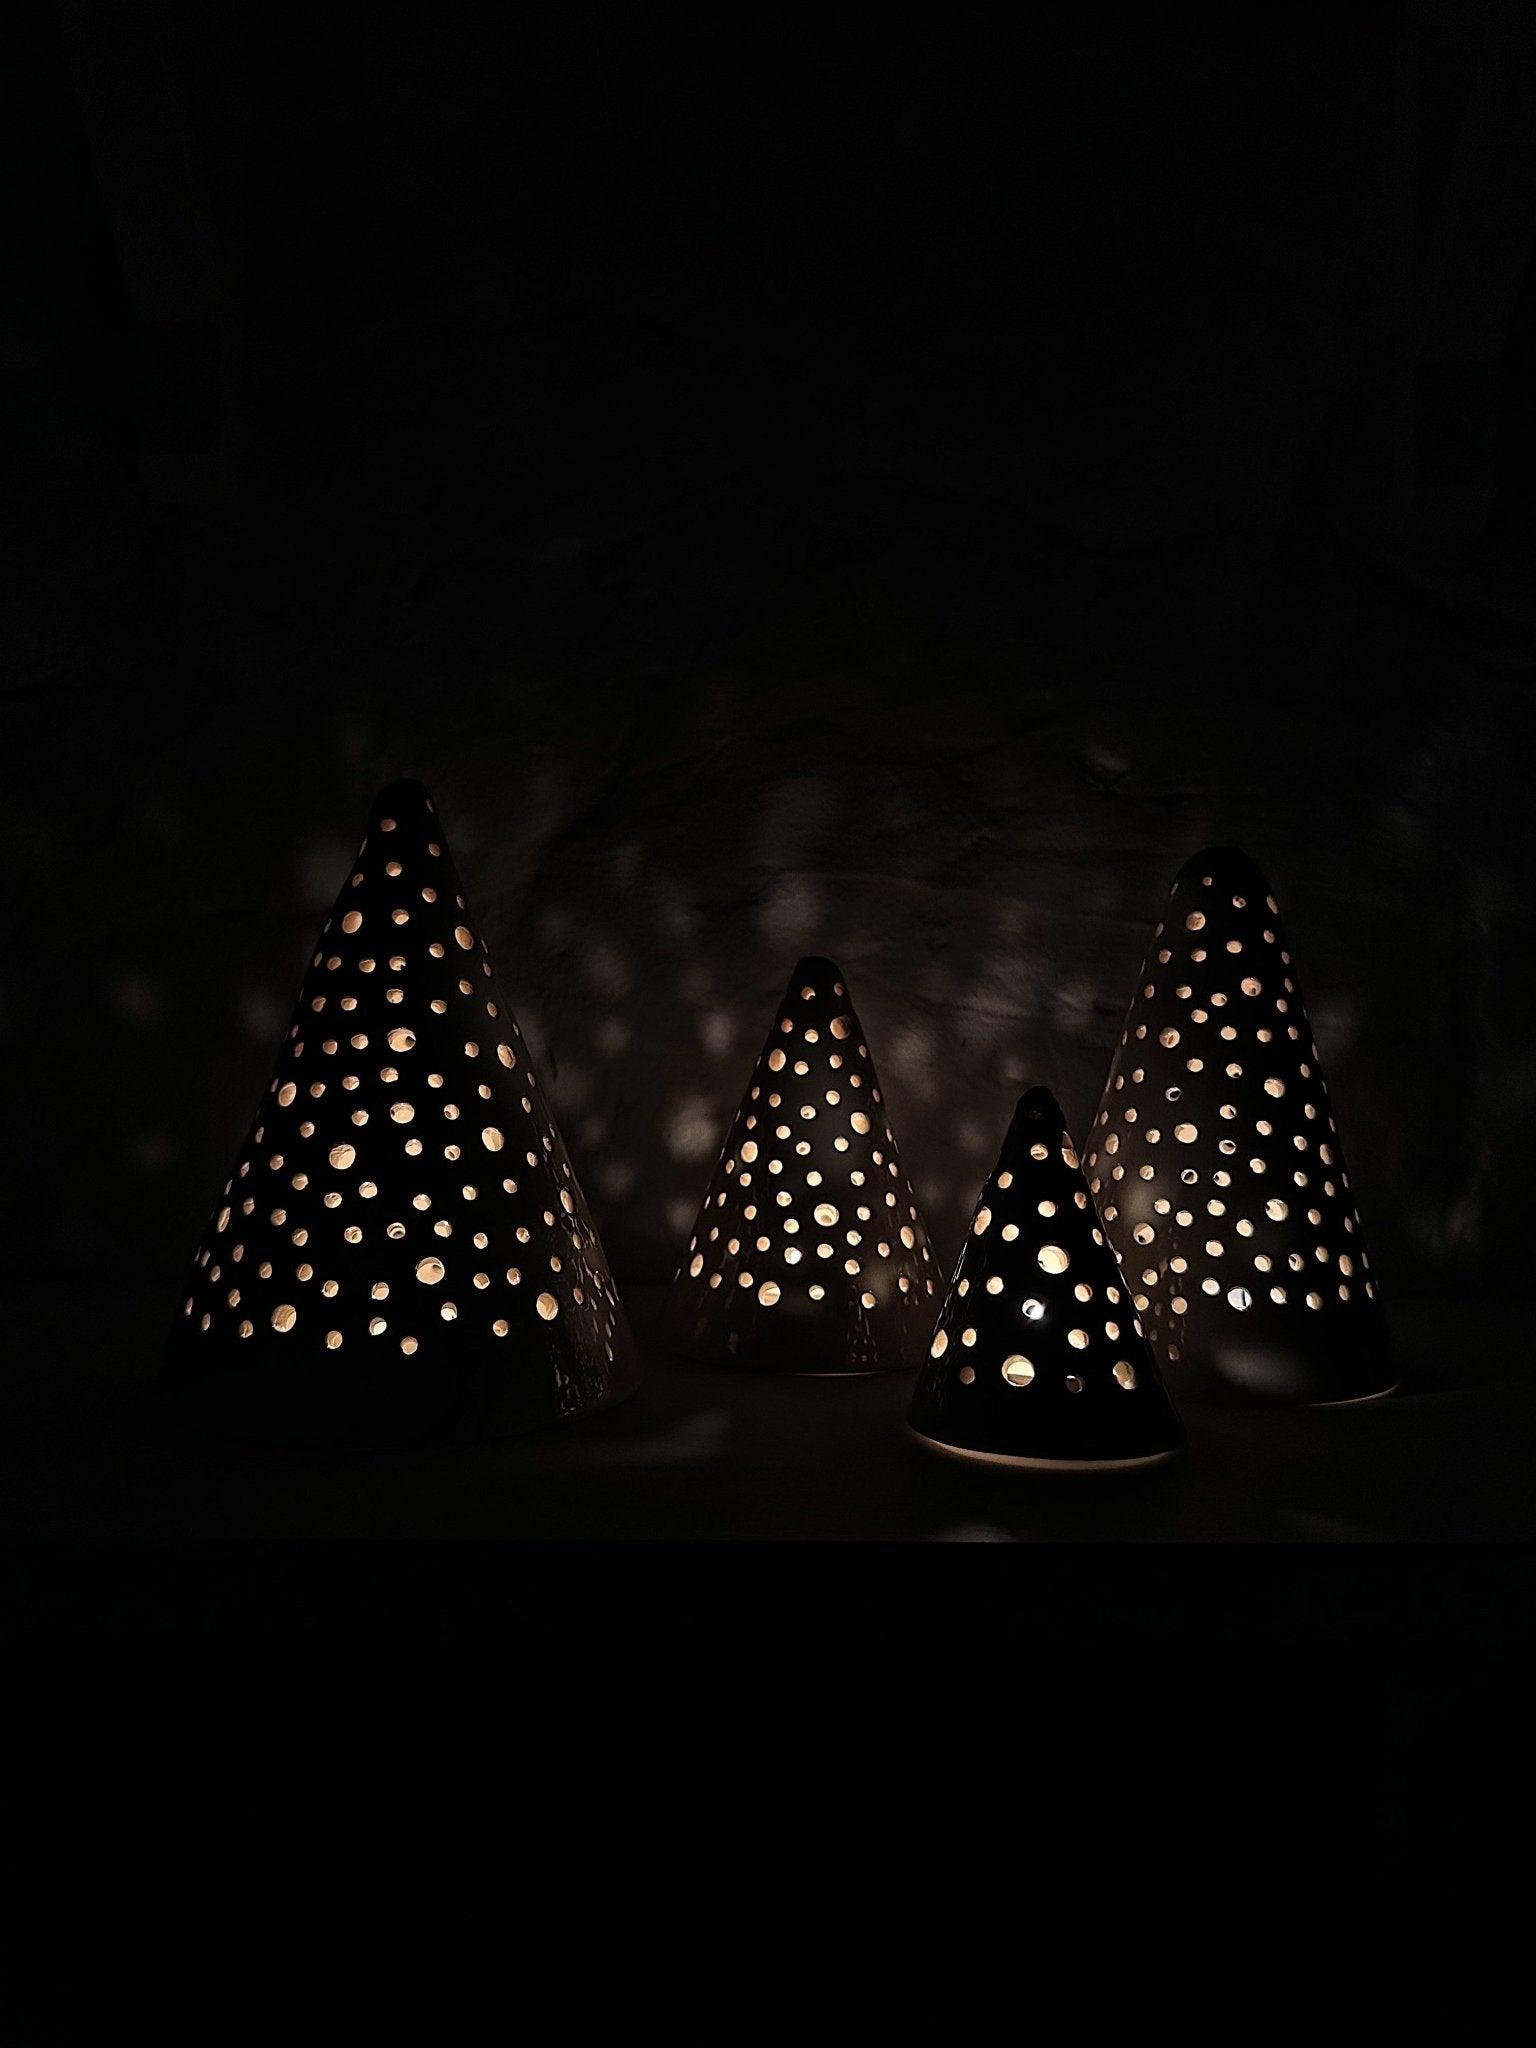 Starry Trees Candle Luminaries - MuddyHeartMuddyHeartHoliday